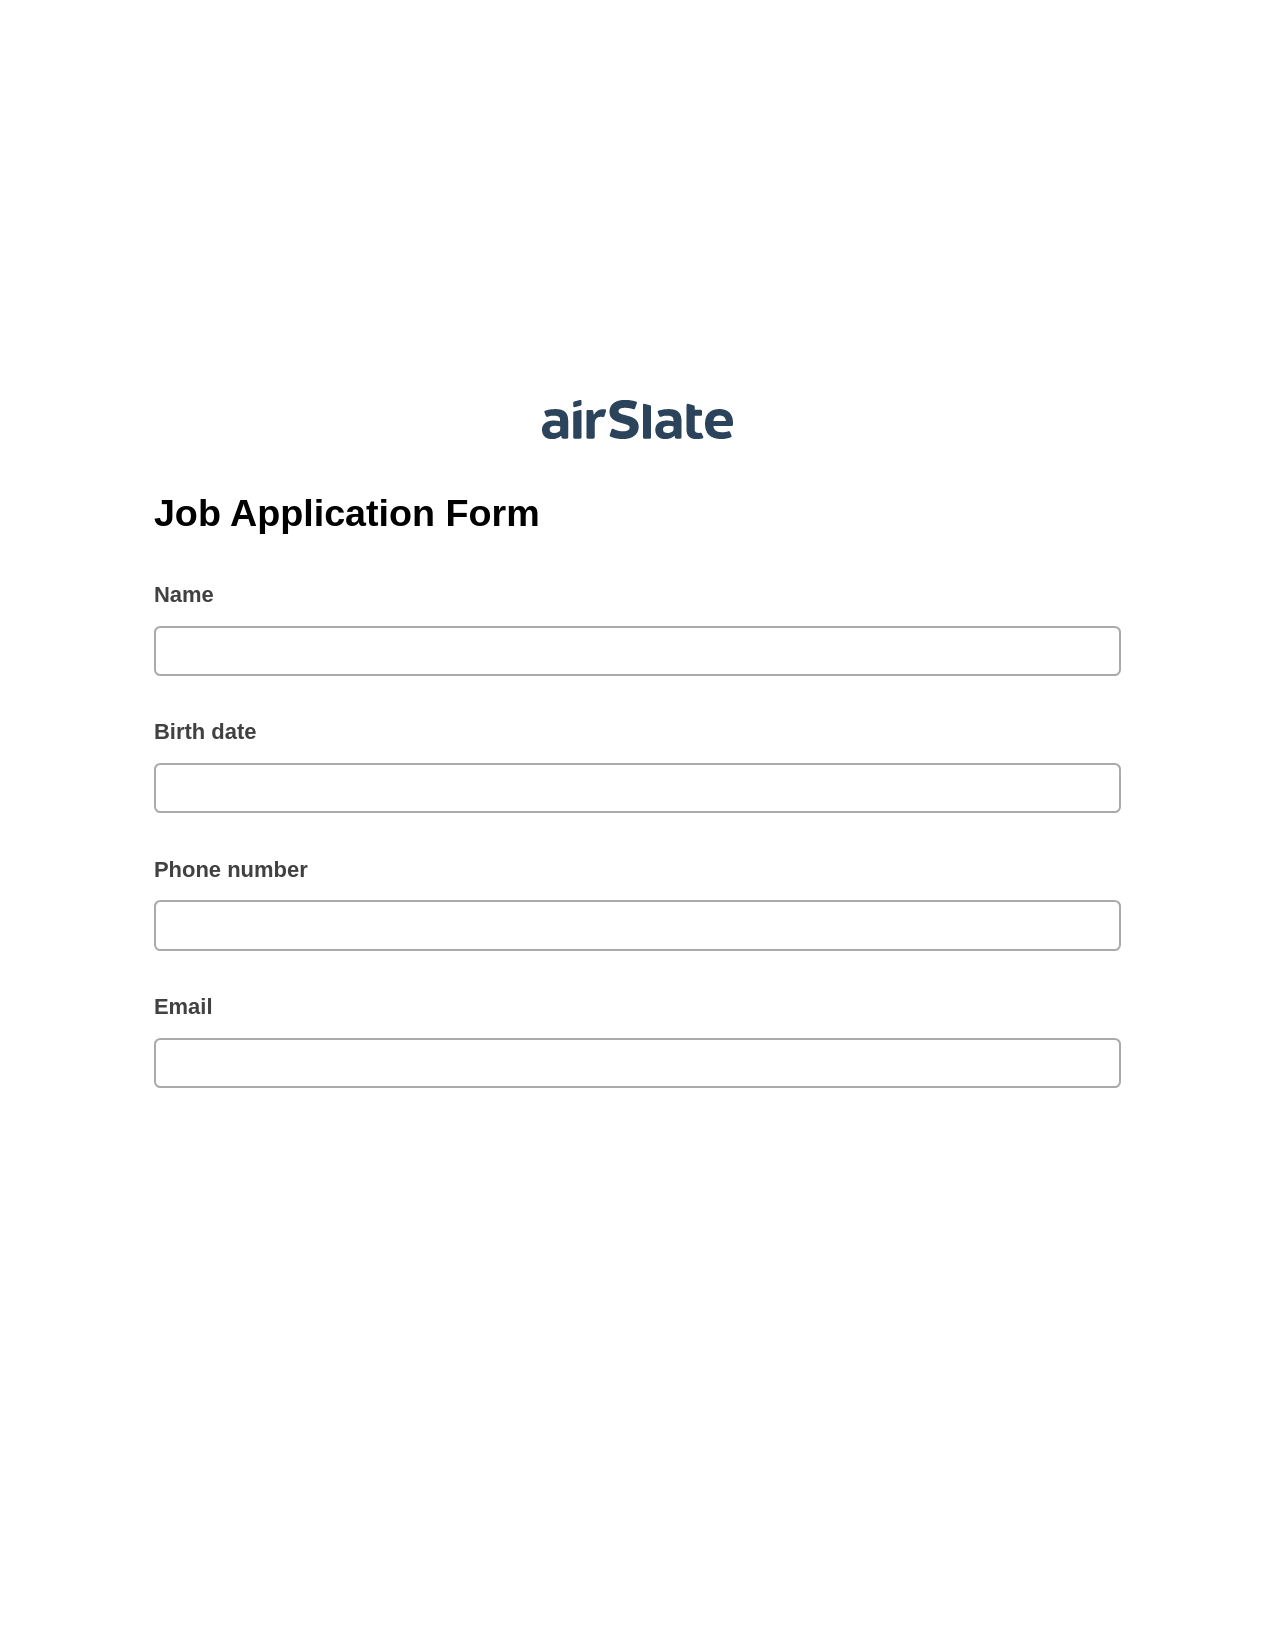 Job Application Form Pre-fill from Google Sheet Dropdown Options Bot, Create MS Dynamics 365 Records Bot, Google Drive Bot